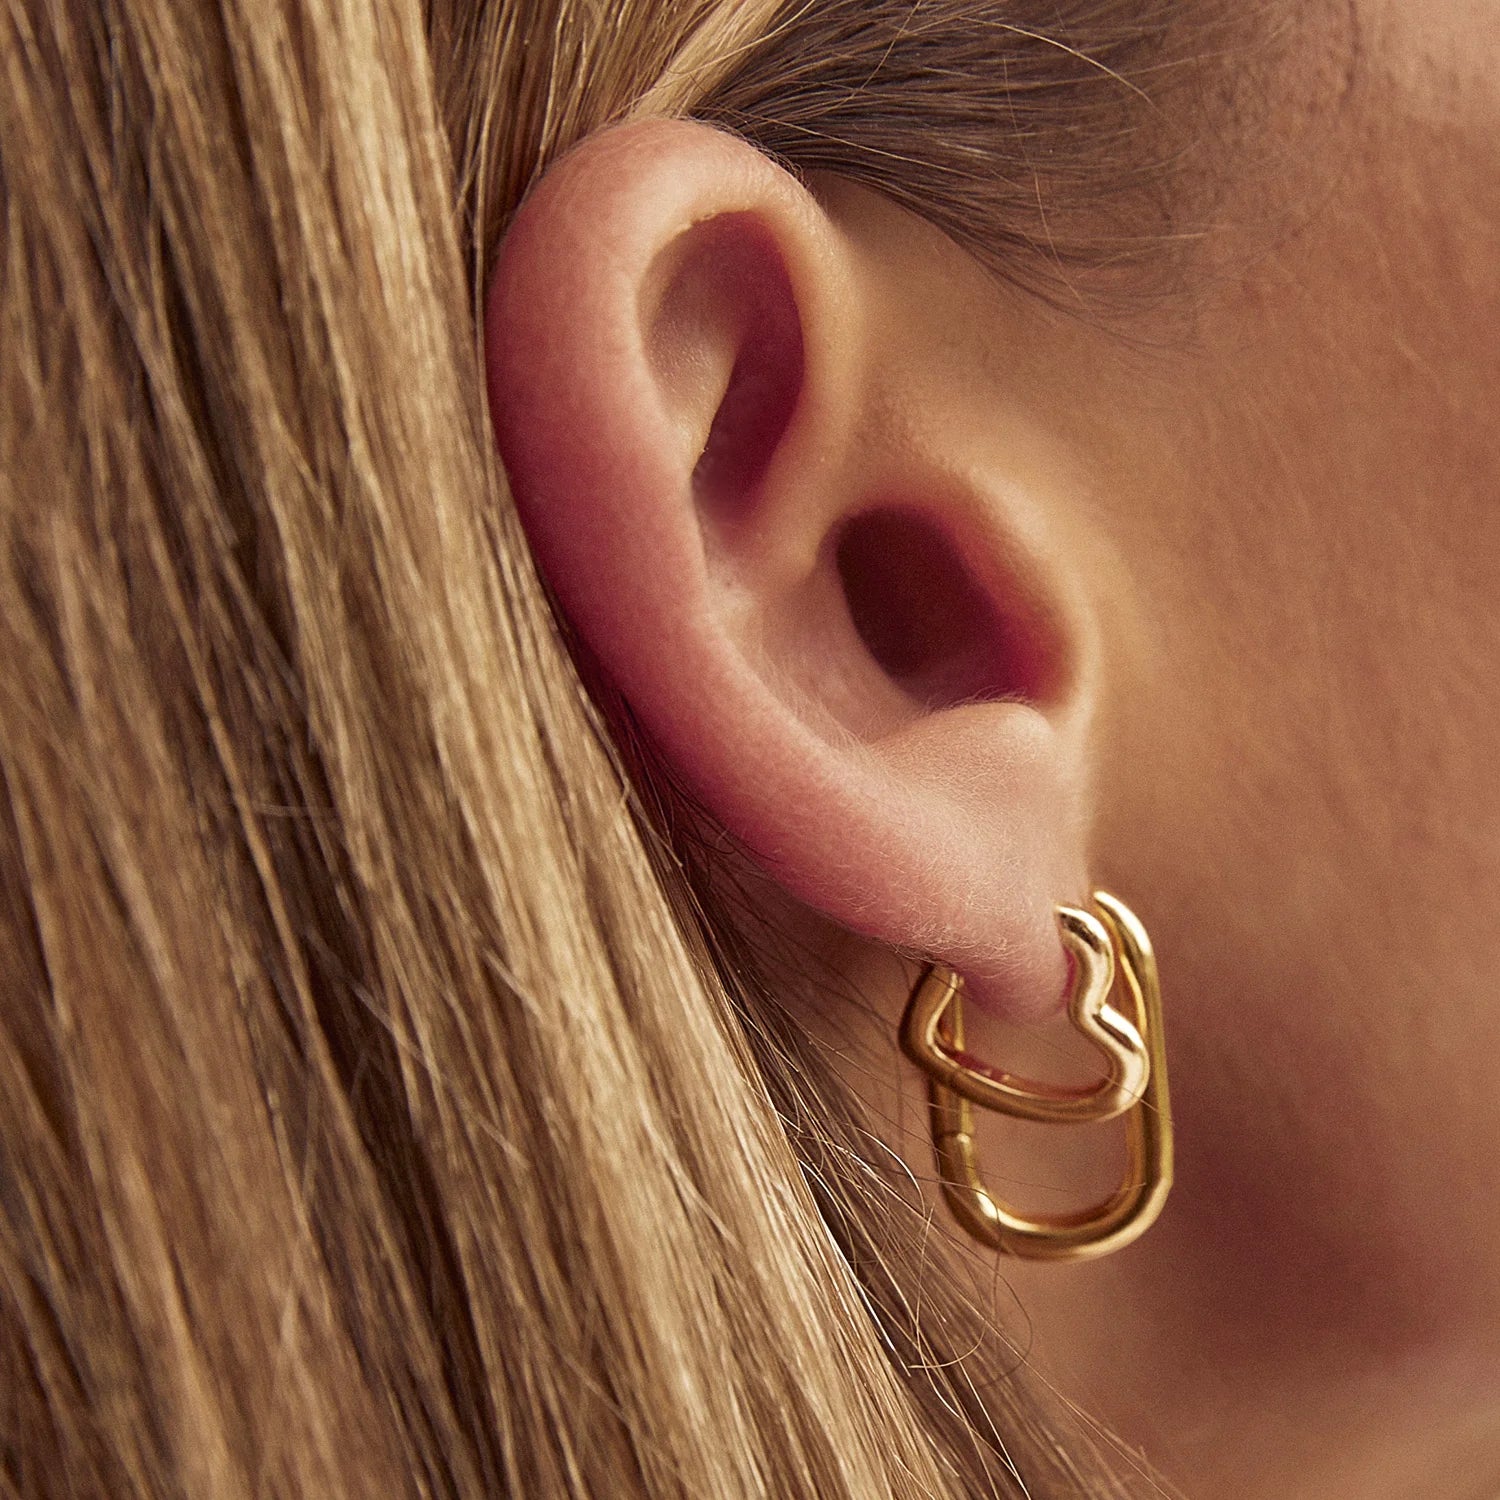 Sweetheart Gold Earrings - Small